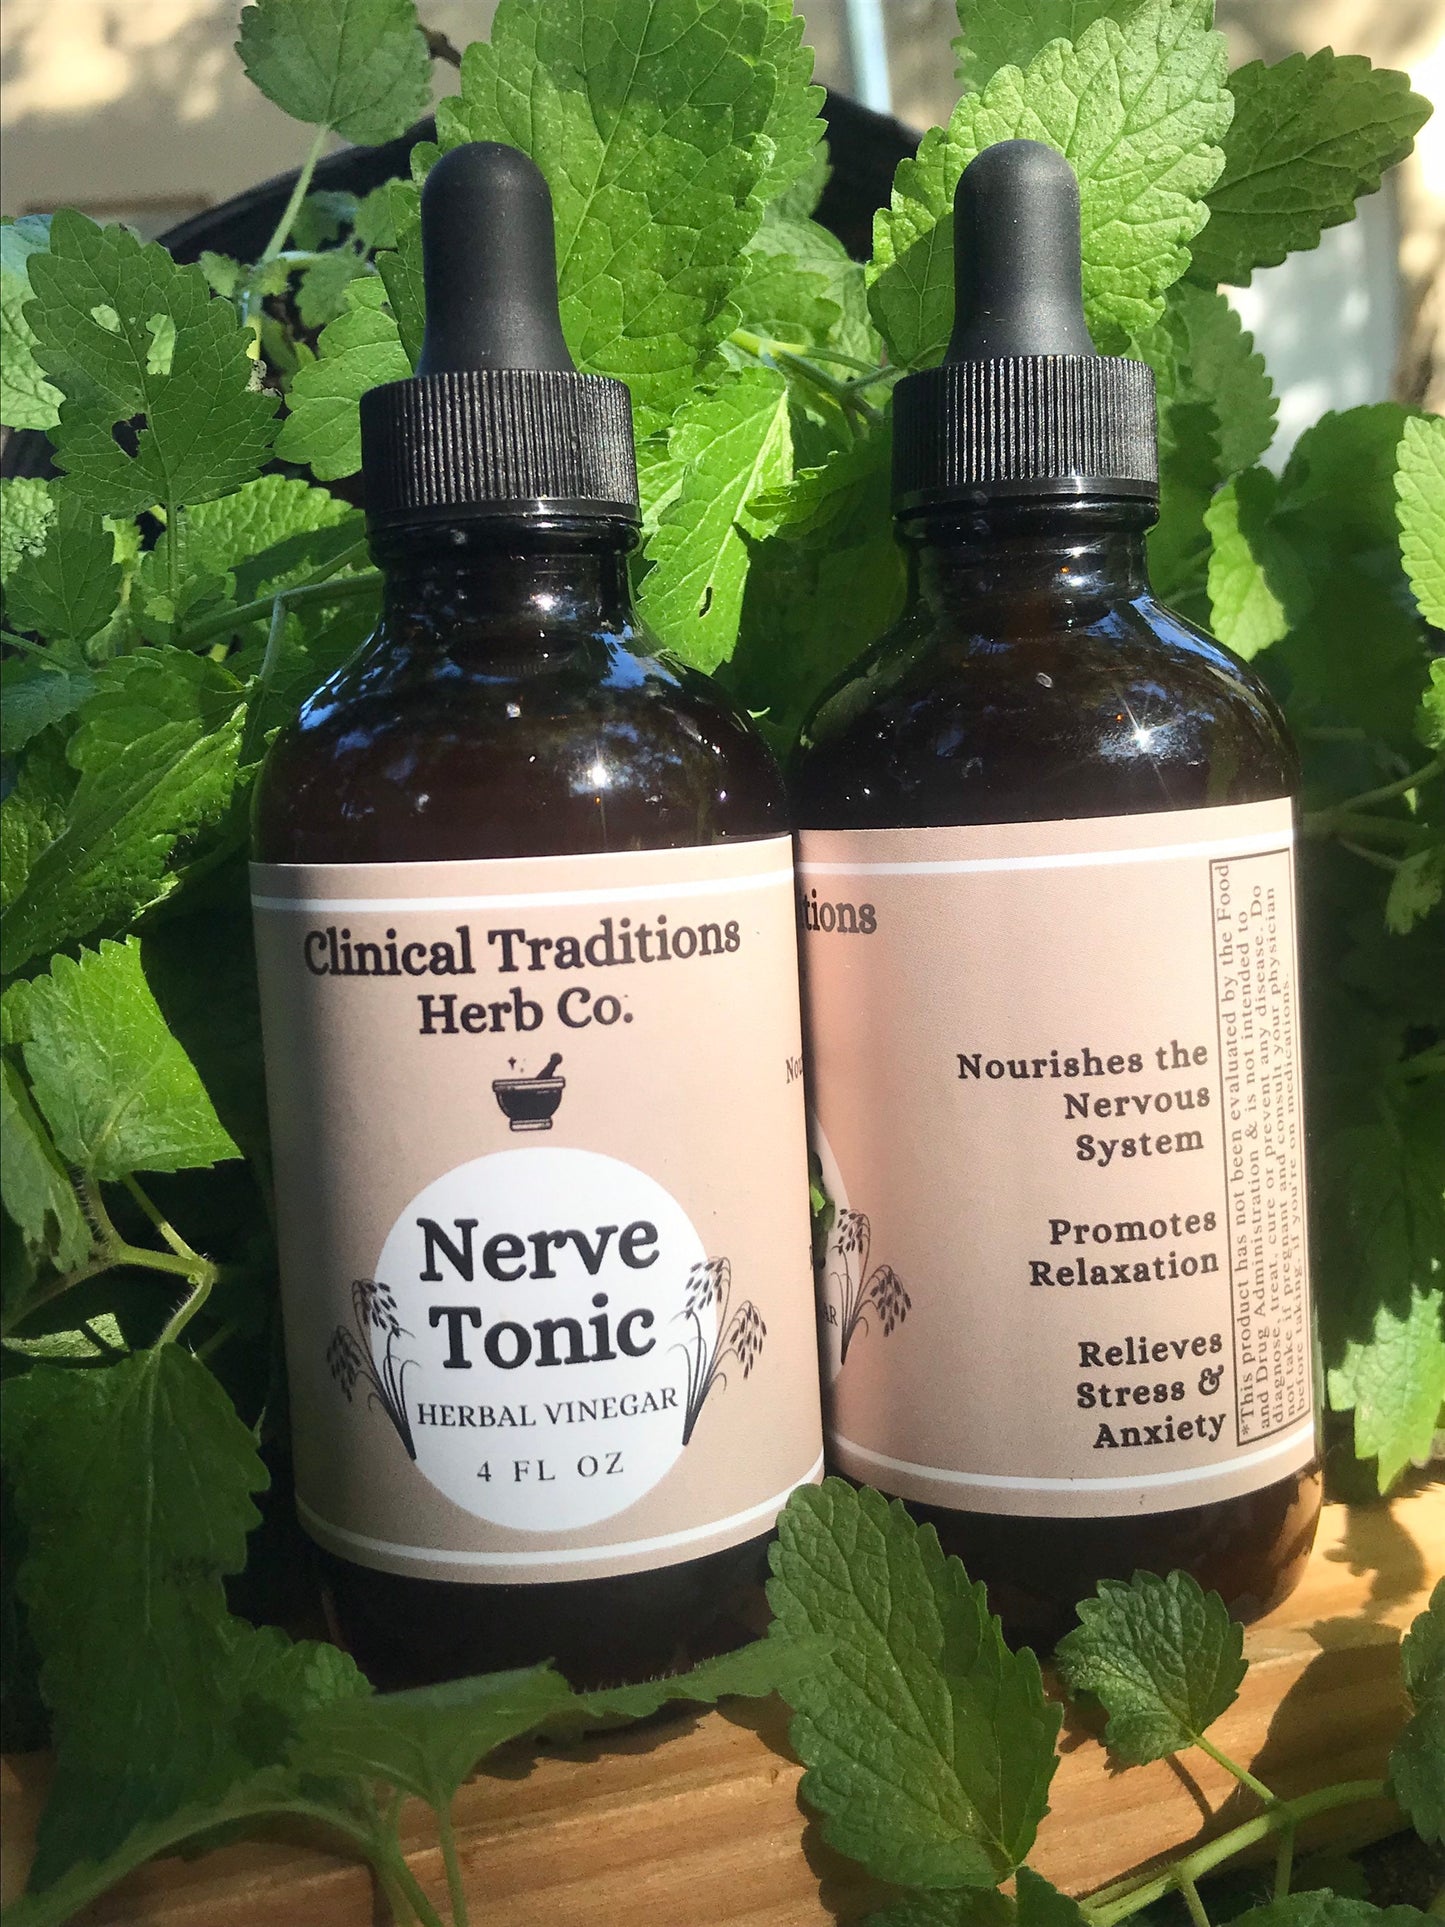 Nerve Tonic: an Herbal Vinegar supplement for the Nervous System